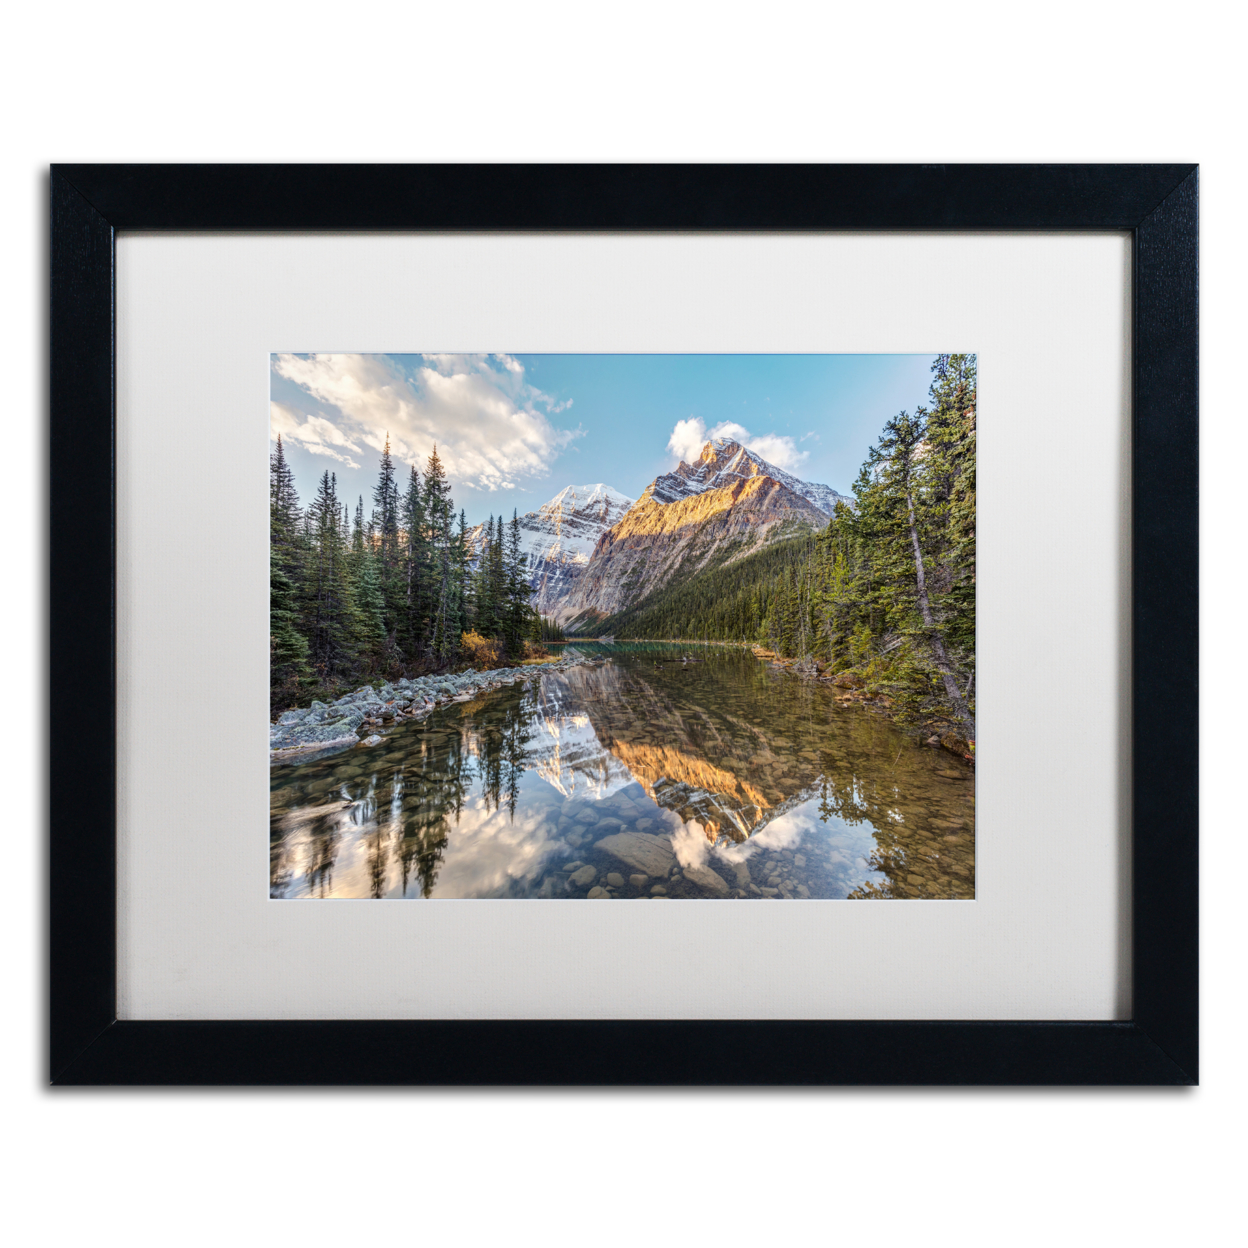 Pierre Leclerc 'Jasper National Park' Black Wooden Framed Art 18 X 22 Inches